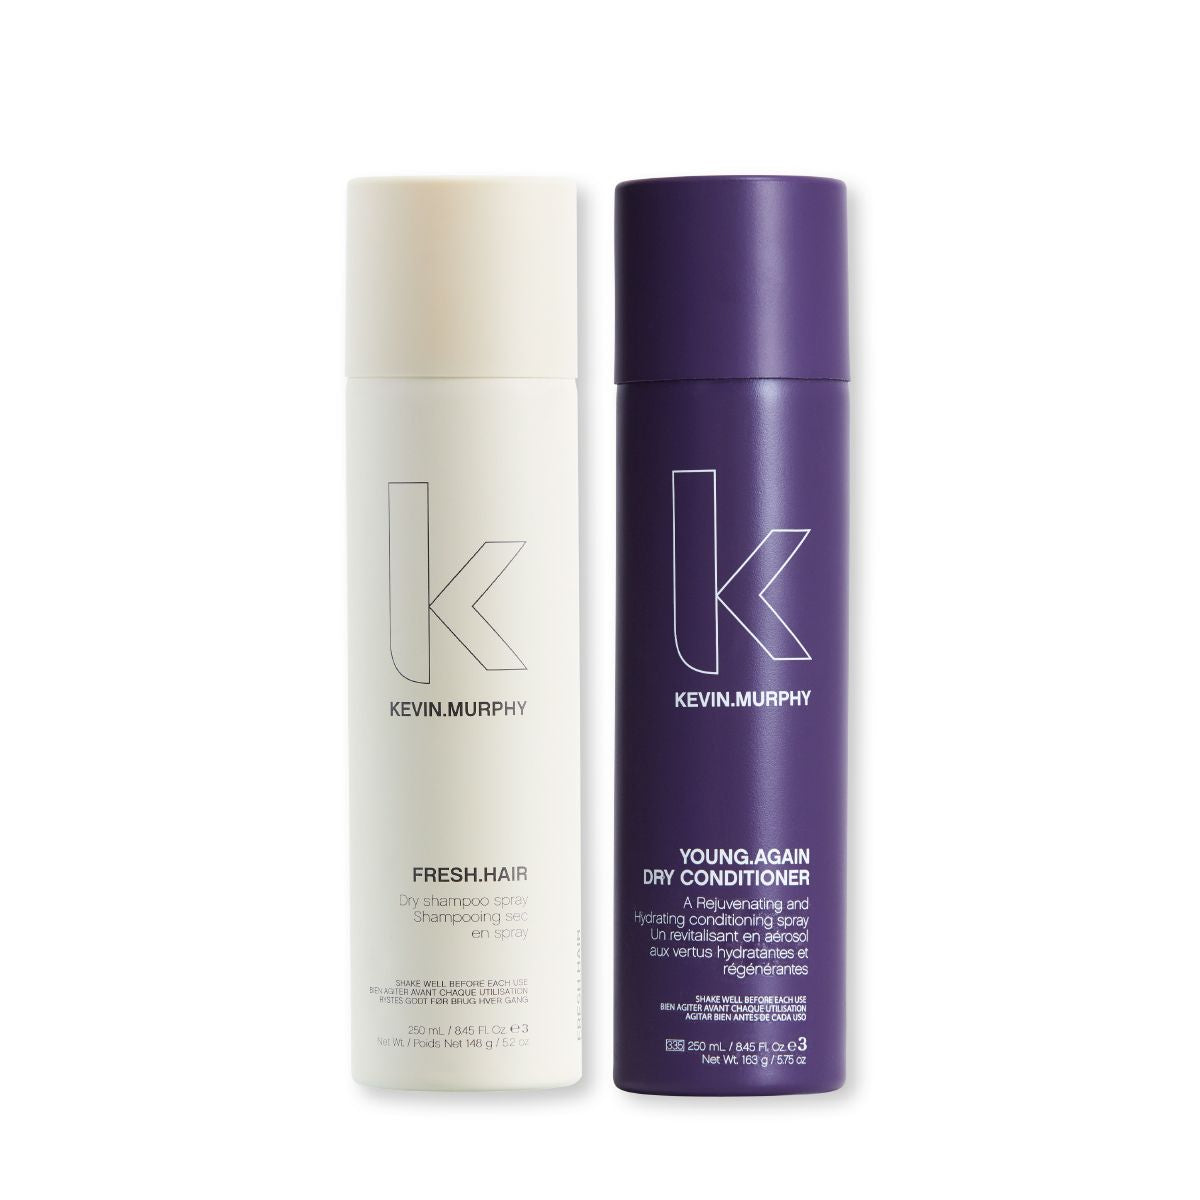 Kevin Murphy Fresh Hair kuivashampoo 250ml & Dry Conditioner kuivahoitoaine 250ml